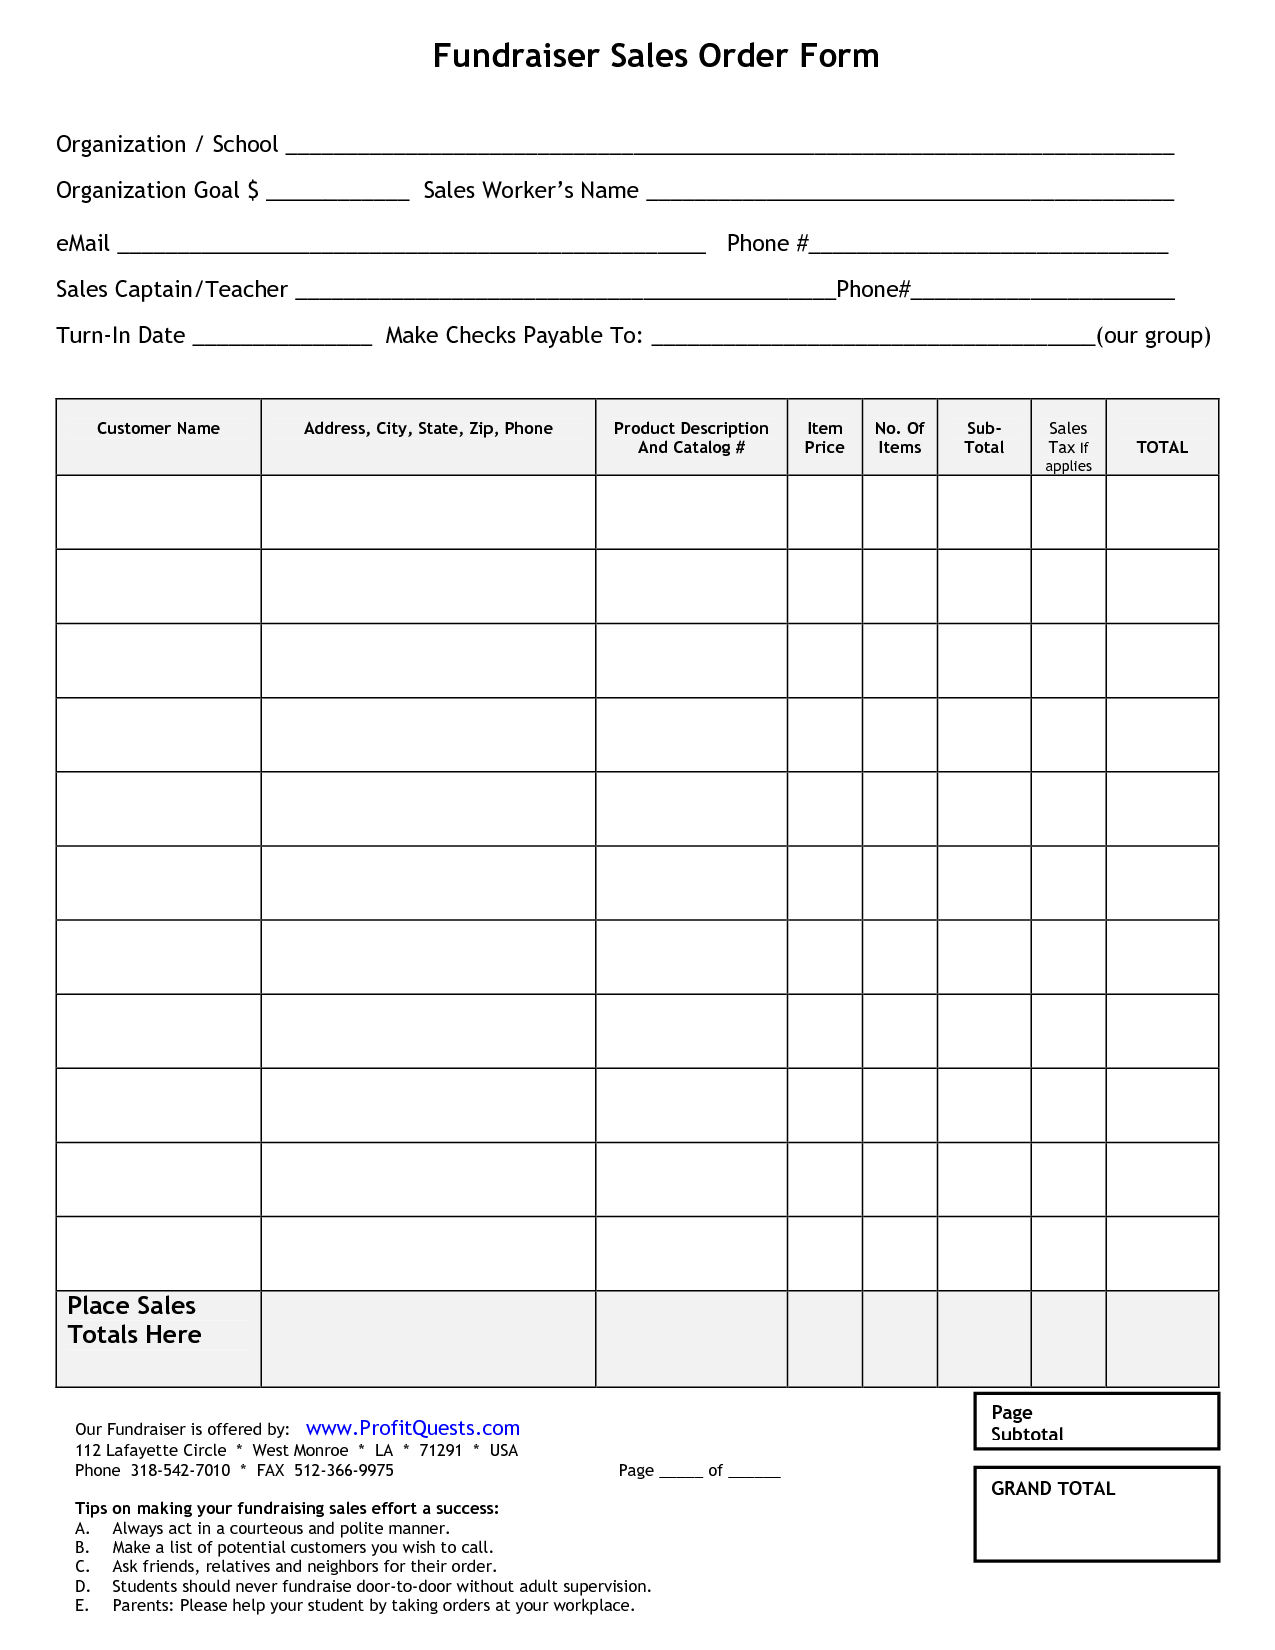 fundraiser order form fundraiser order form template in